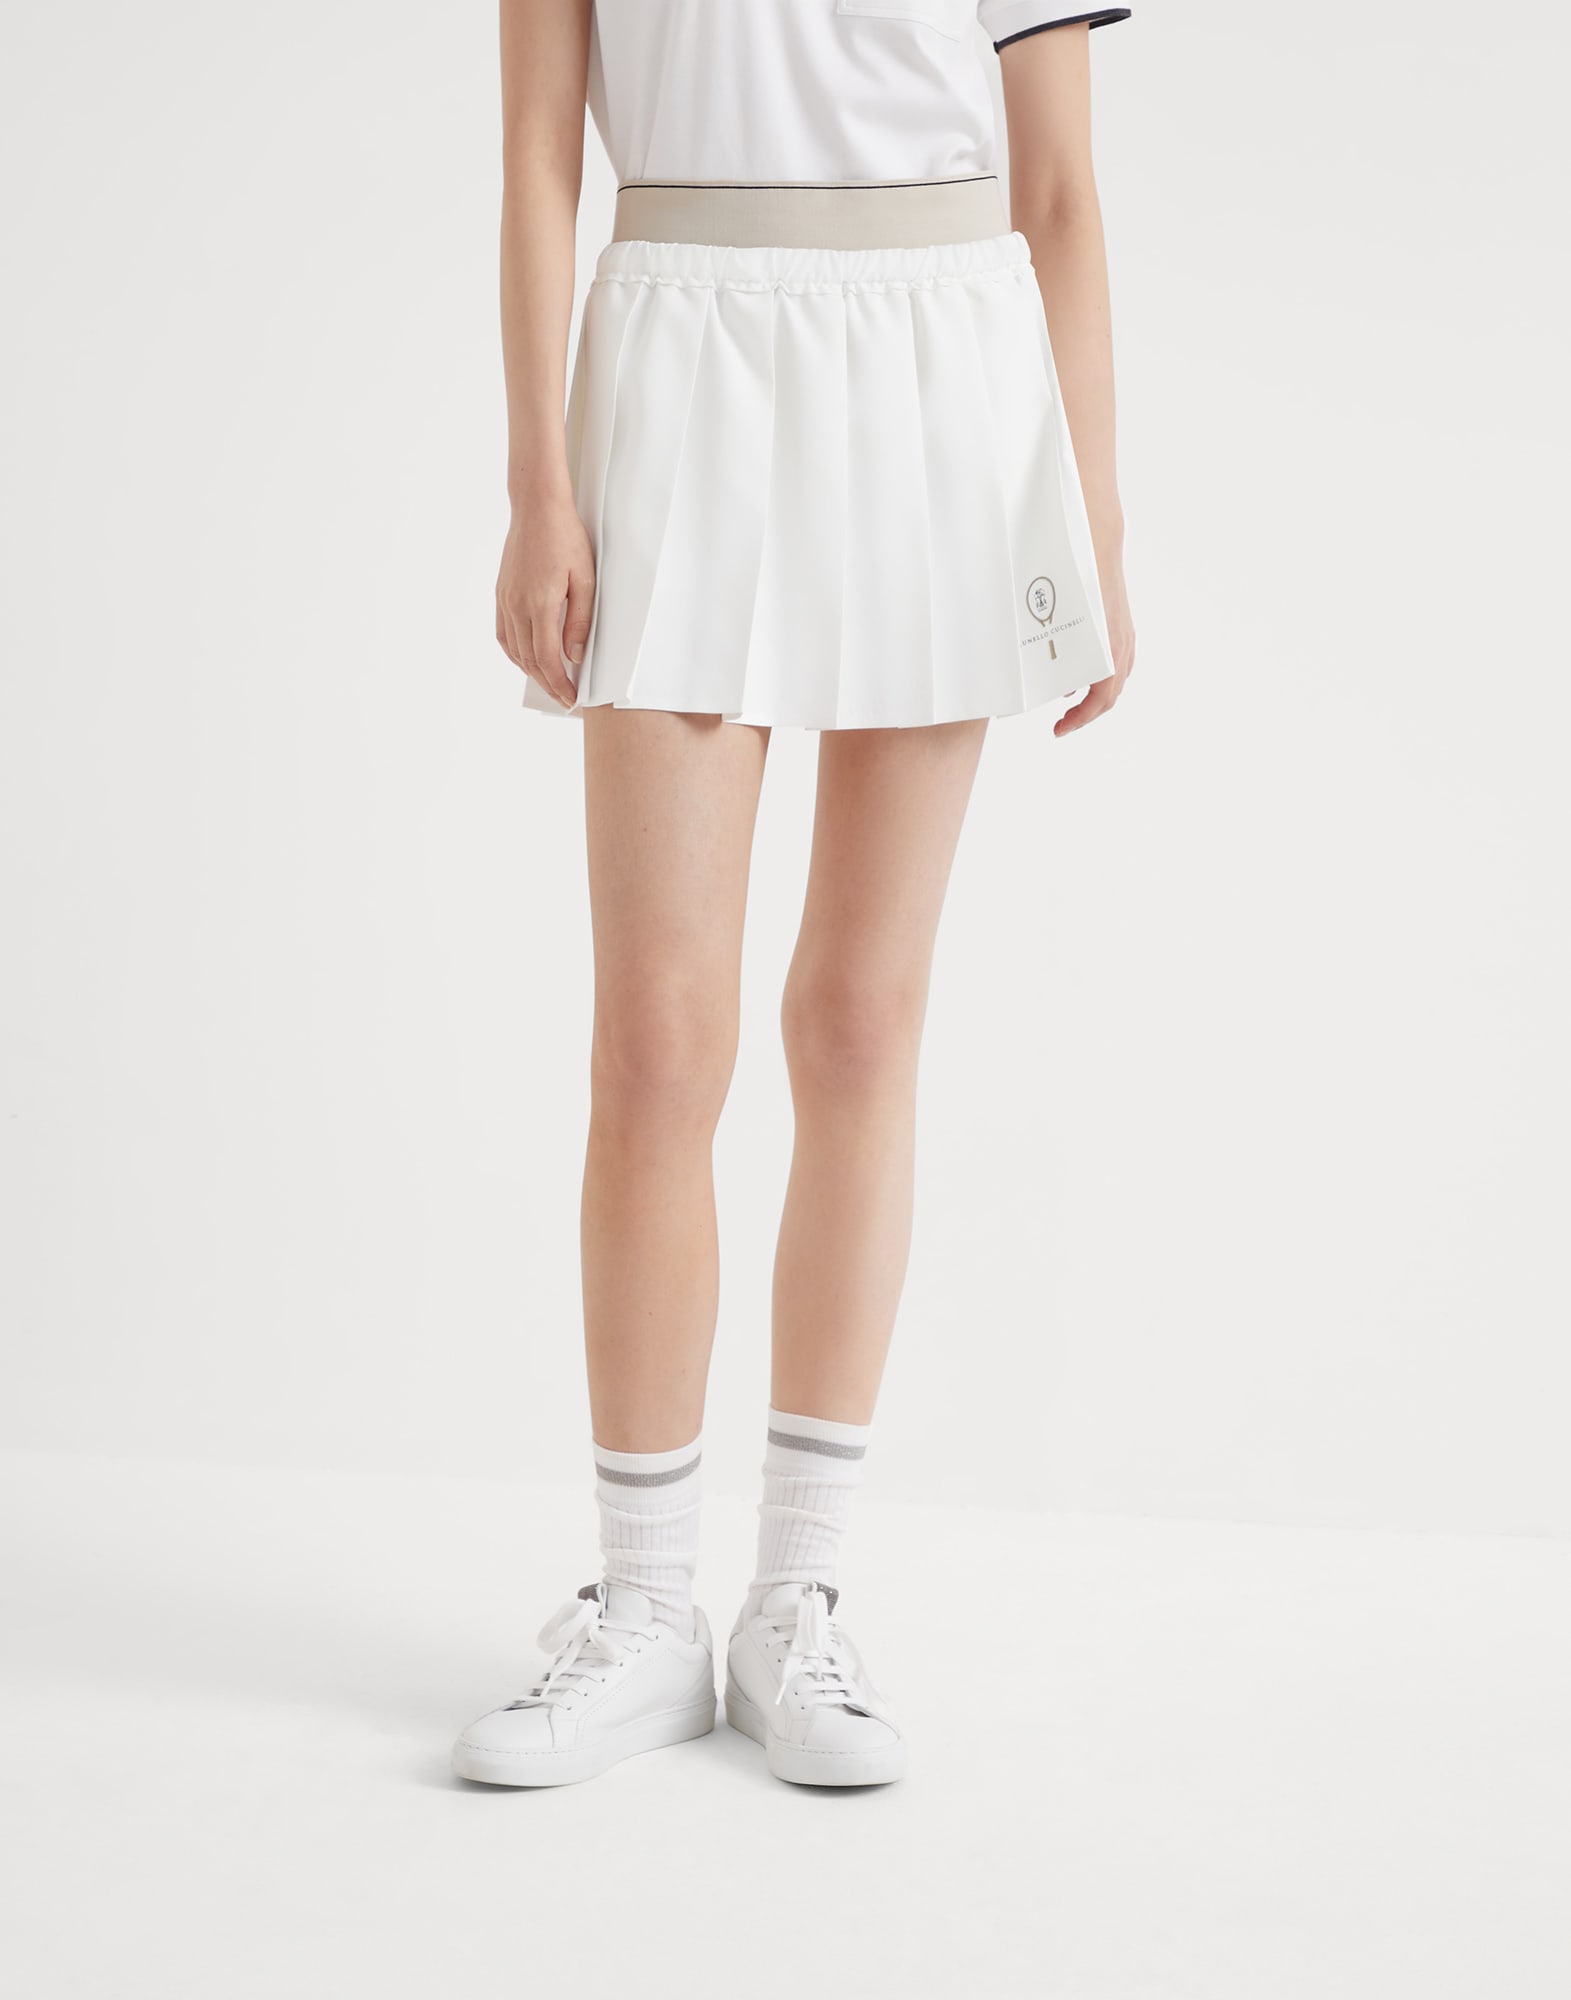 Miniskirt with Tennis Logo White Woman -
                        Brunello Cucinelli
                    